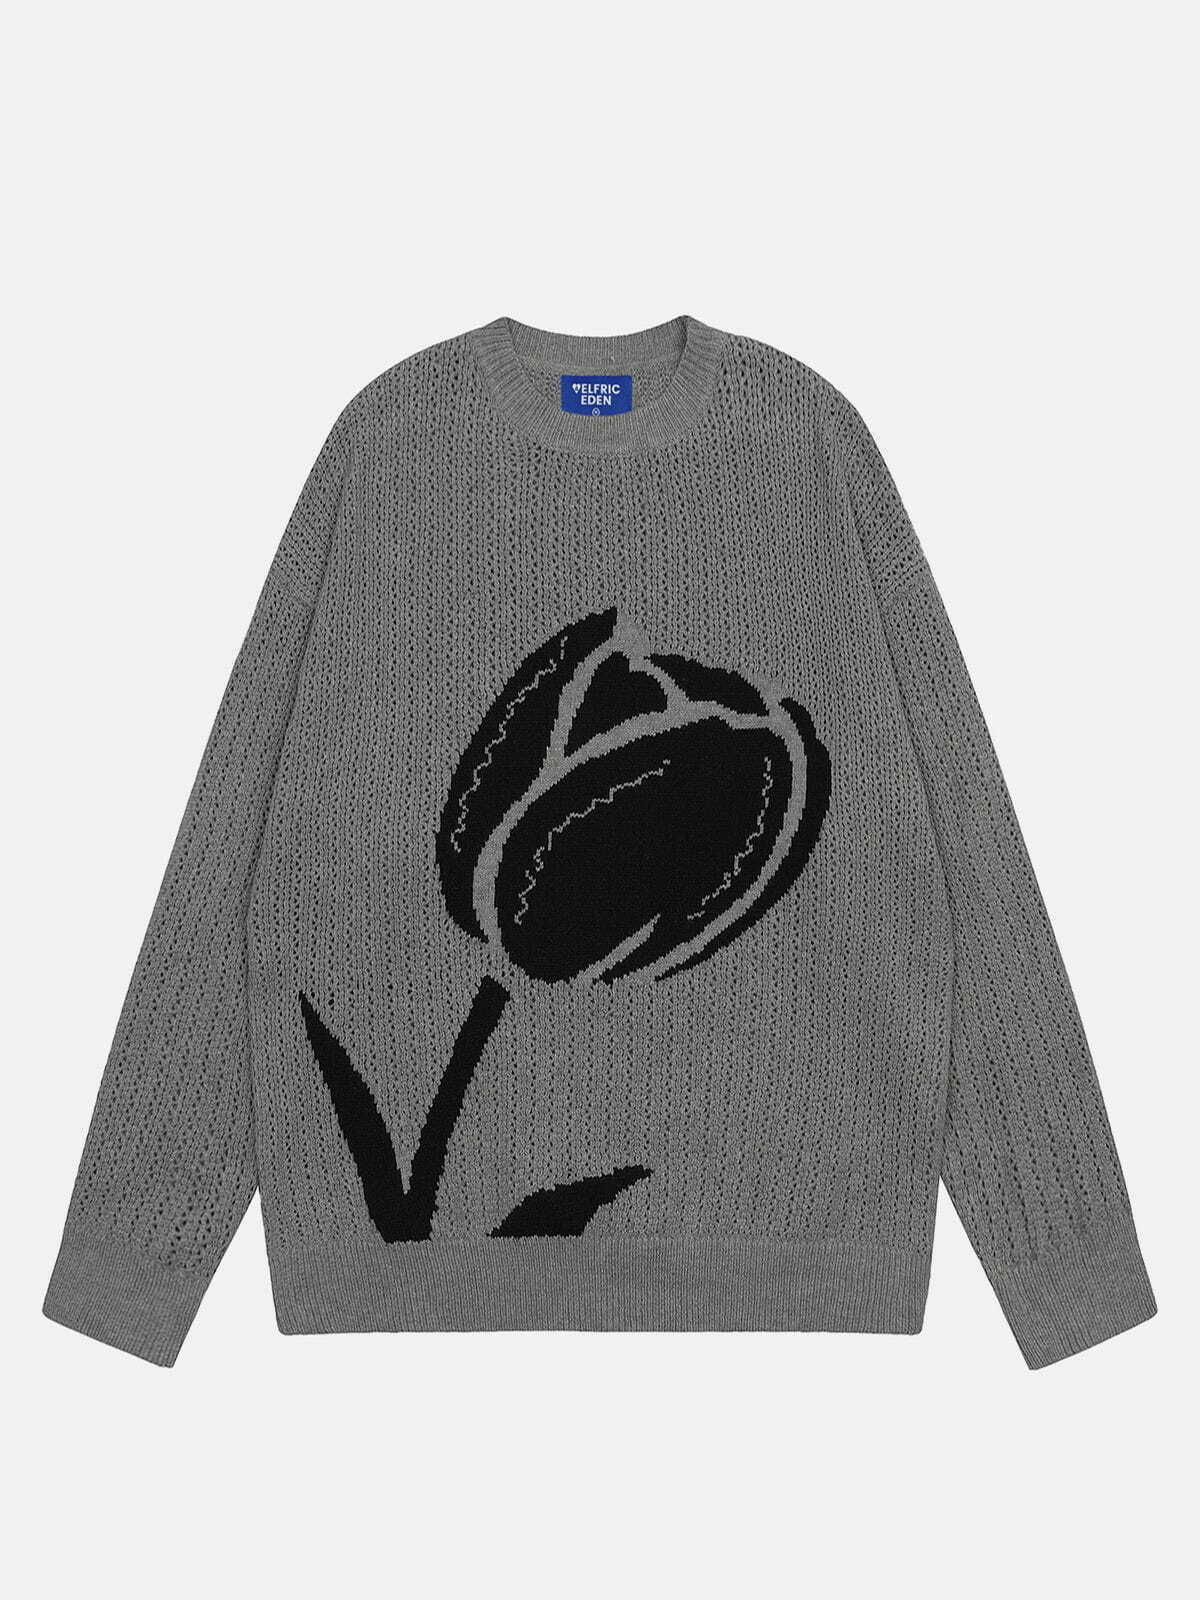 vibrant flower graphic sweater 7930